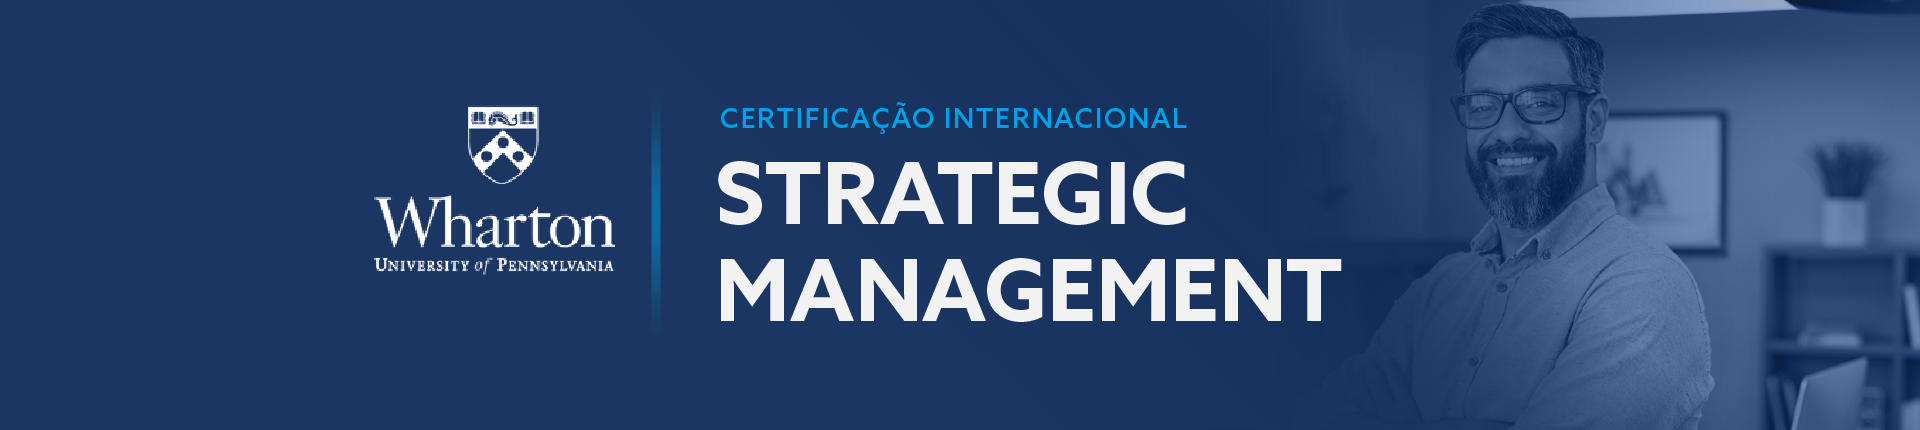 Banner - Strategic Management